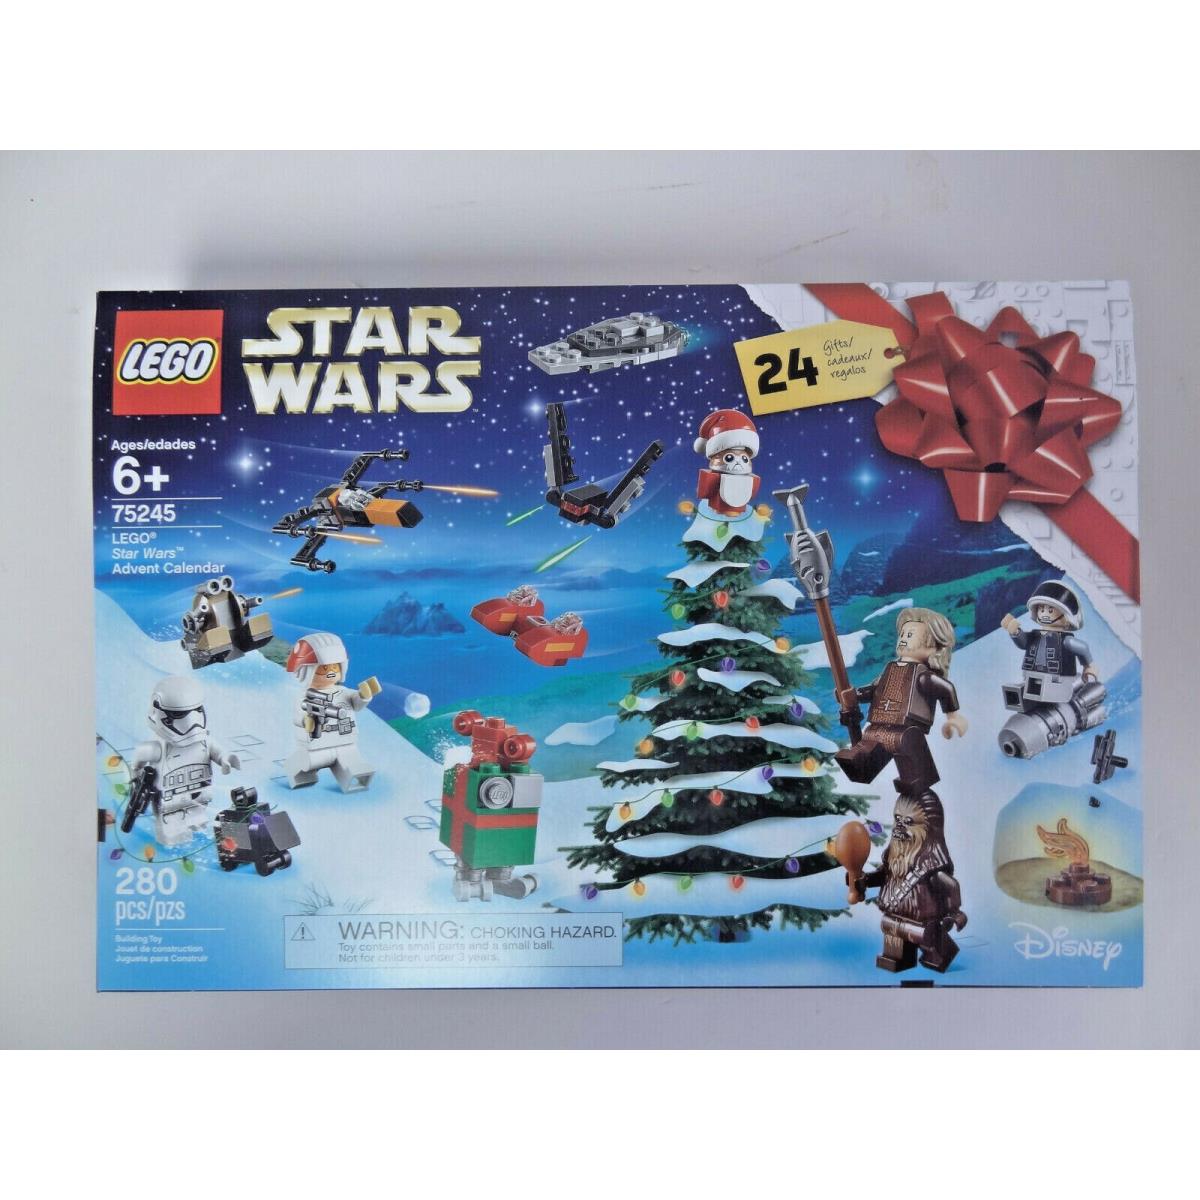 Lego Star Wars: Advent Calendar Set with Mini Figures 280pcs 75245